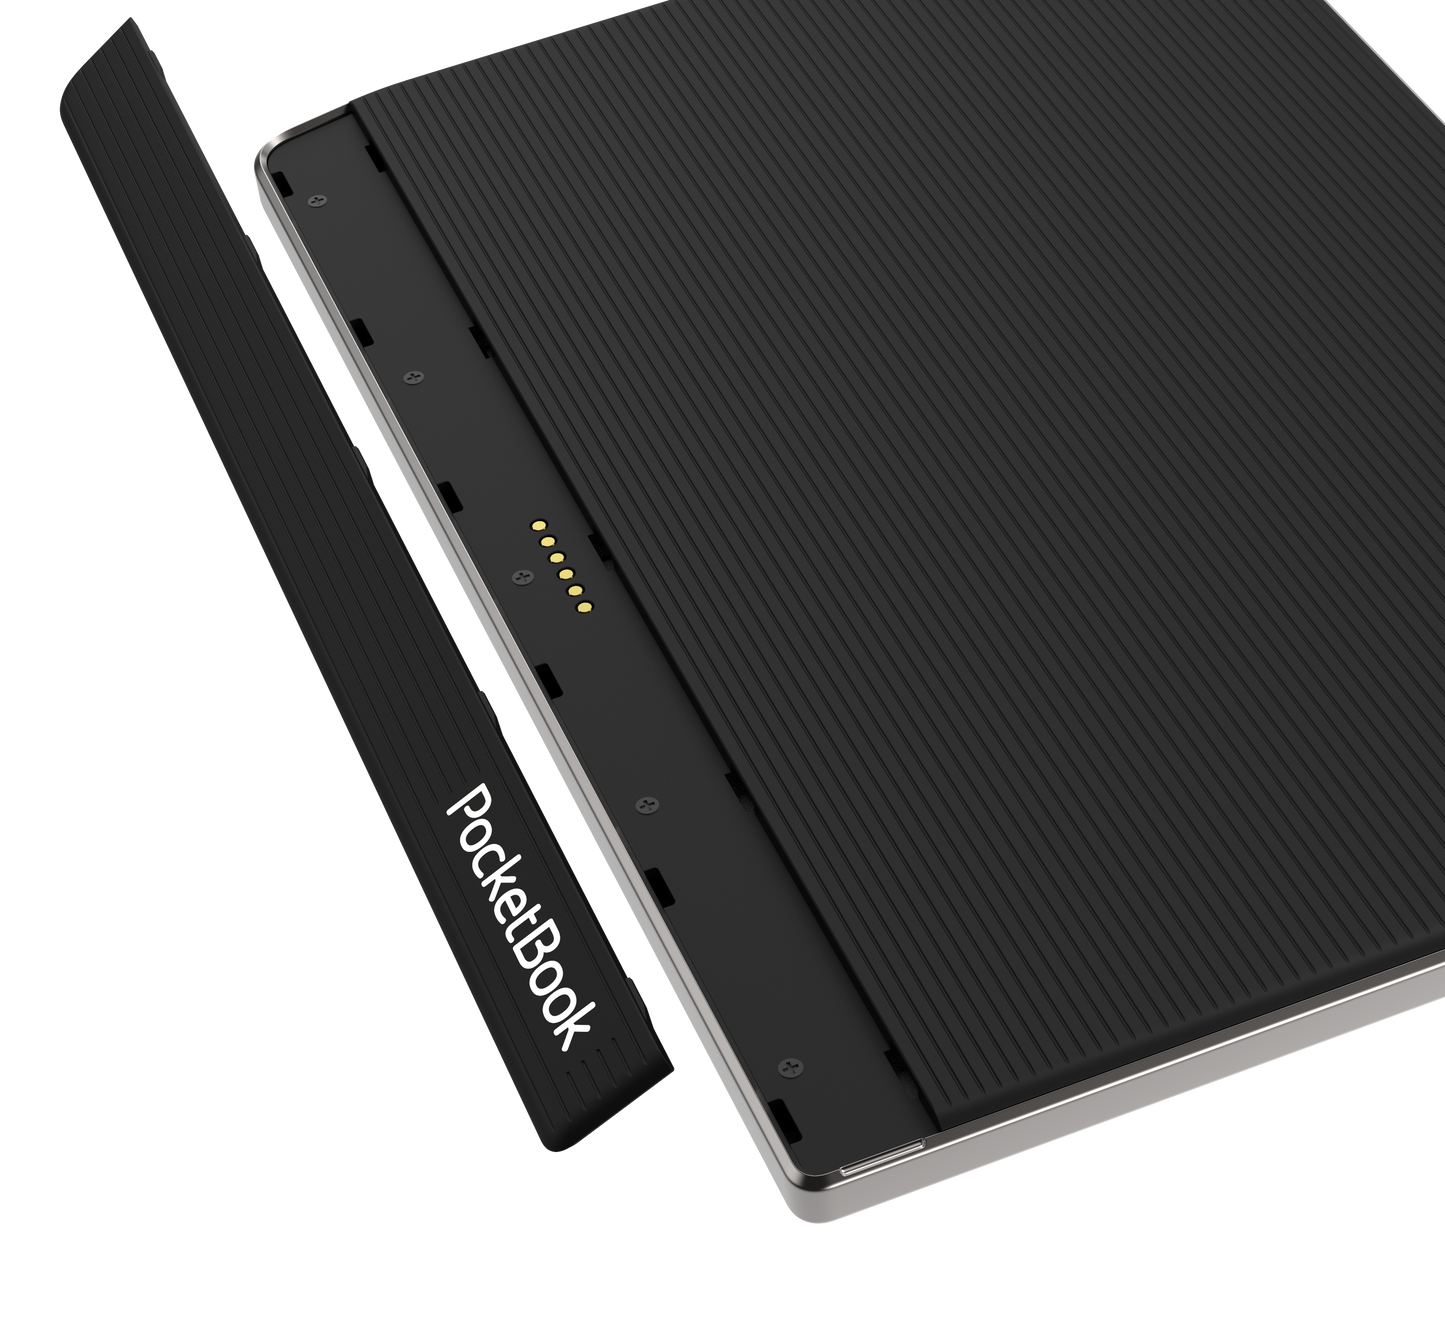 Pocketbook InkPad 4